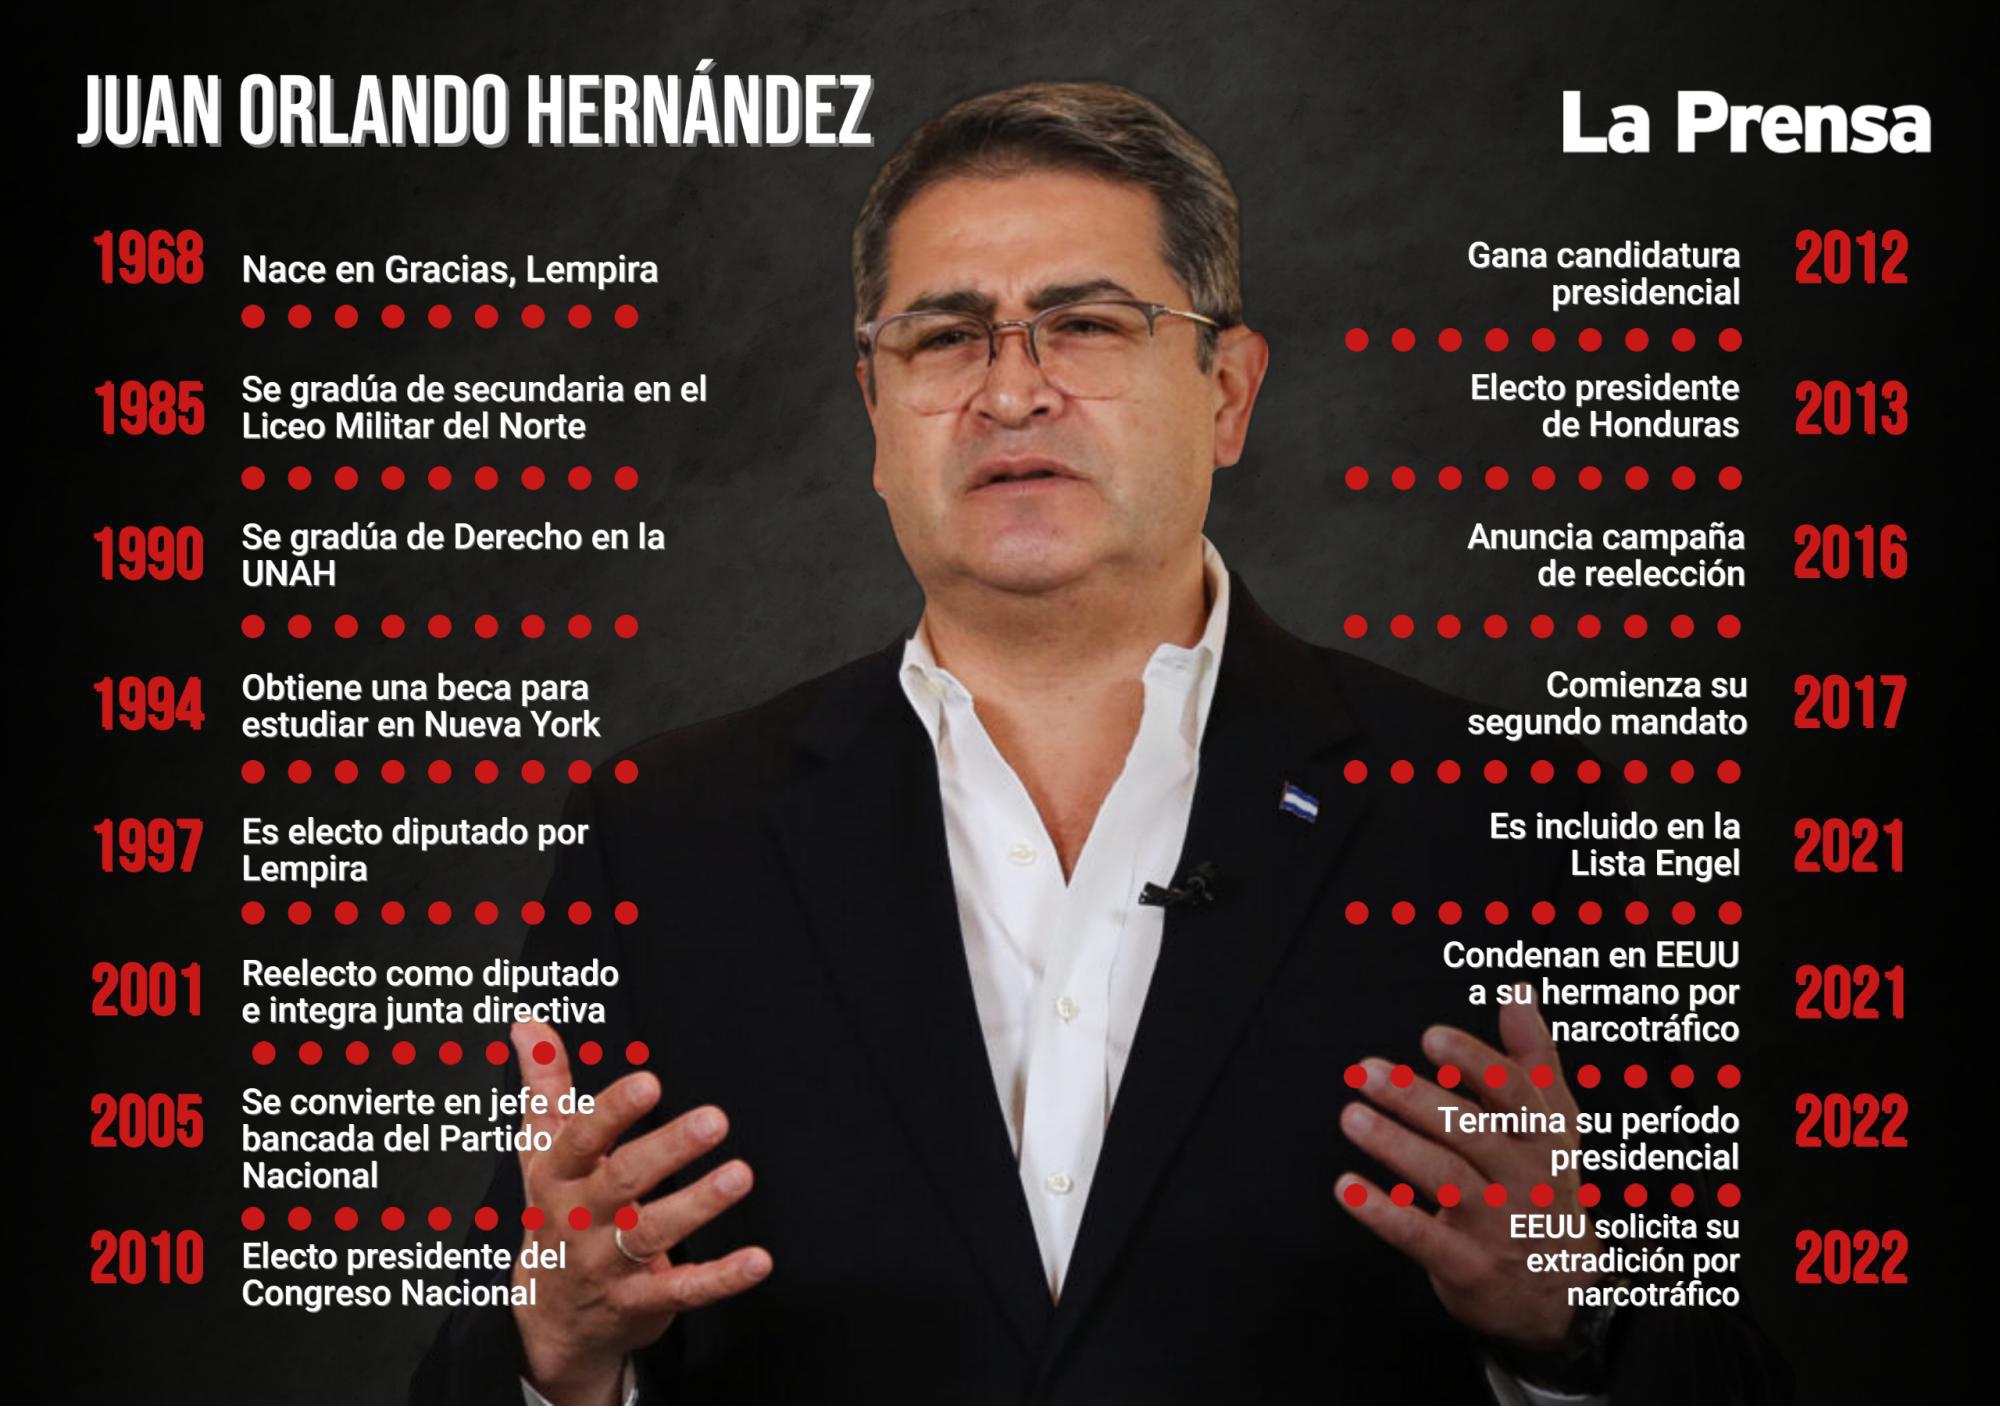 Magistrados deliberan sobre apelación de extradición de Juan Orlando Hernández